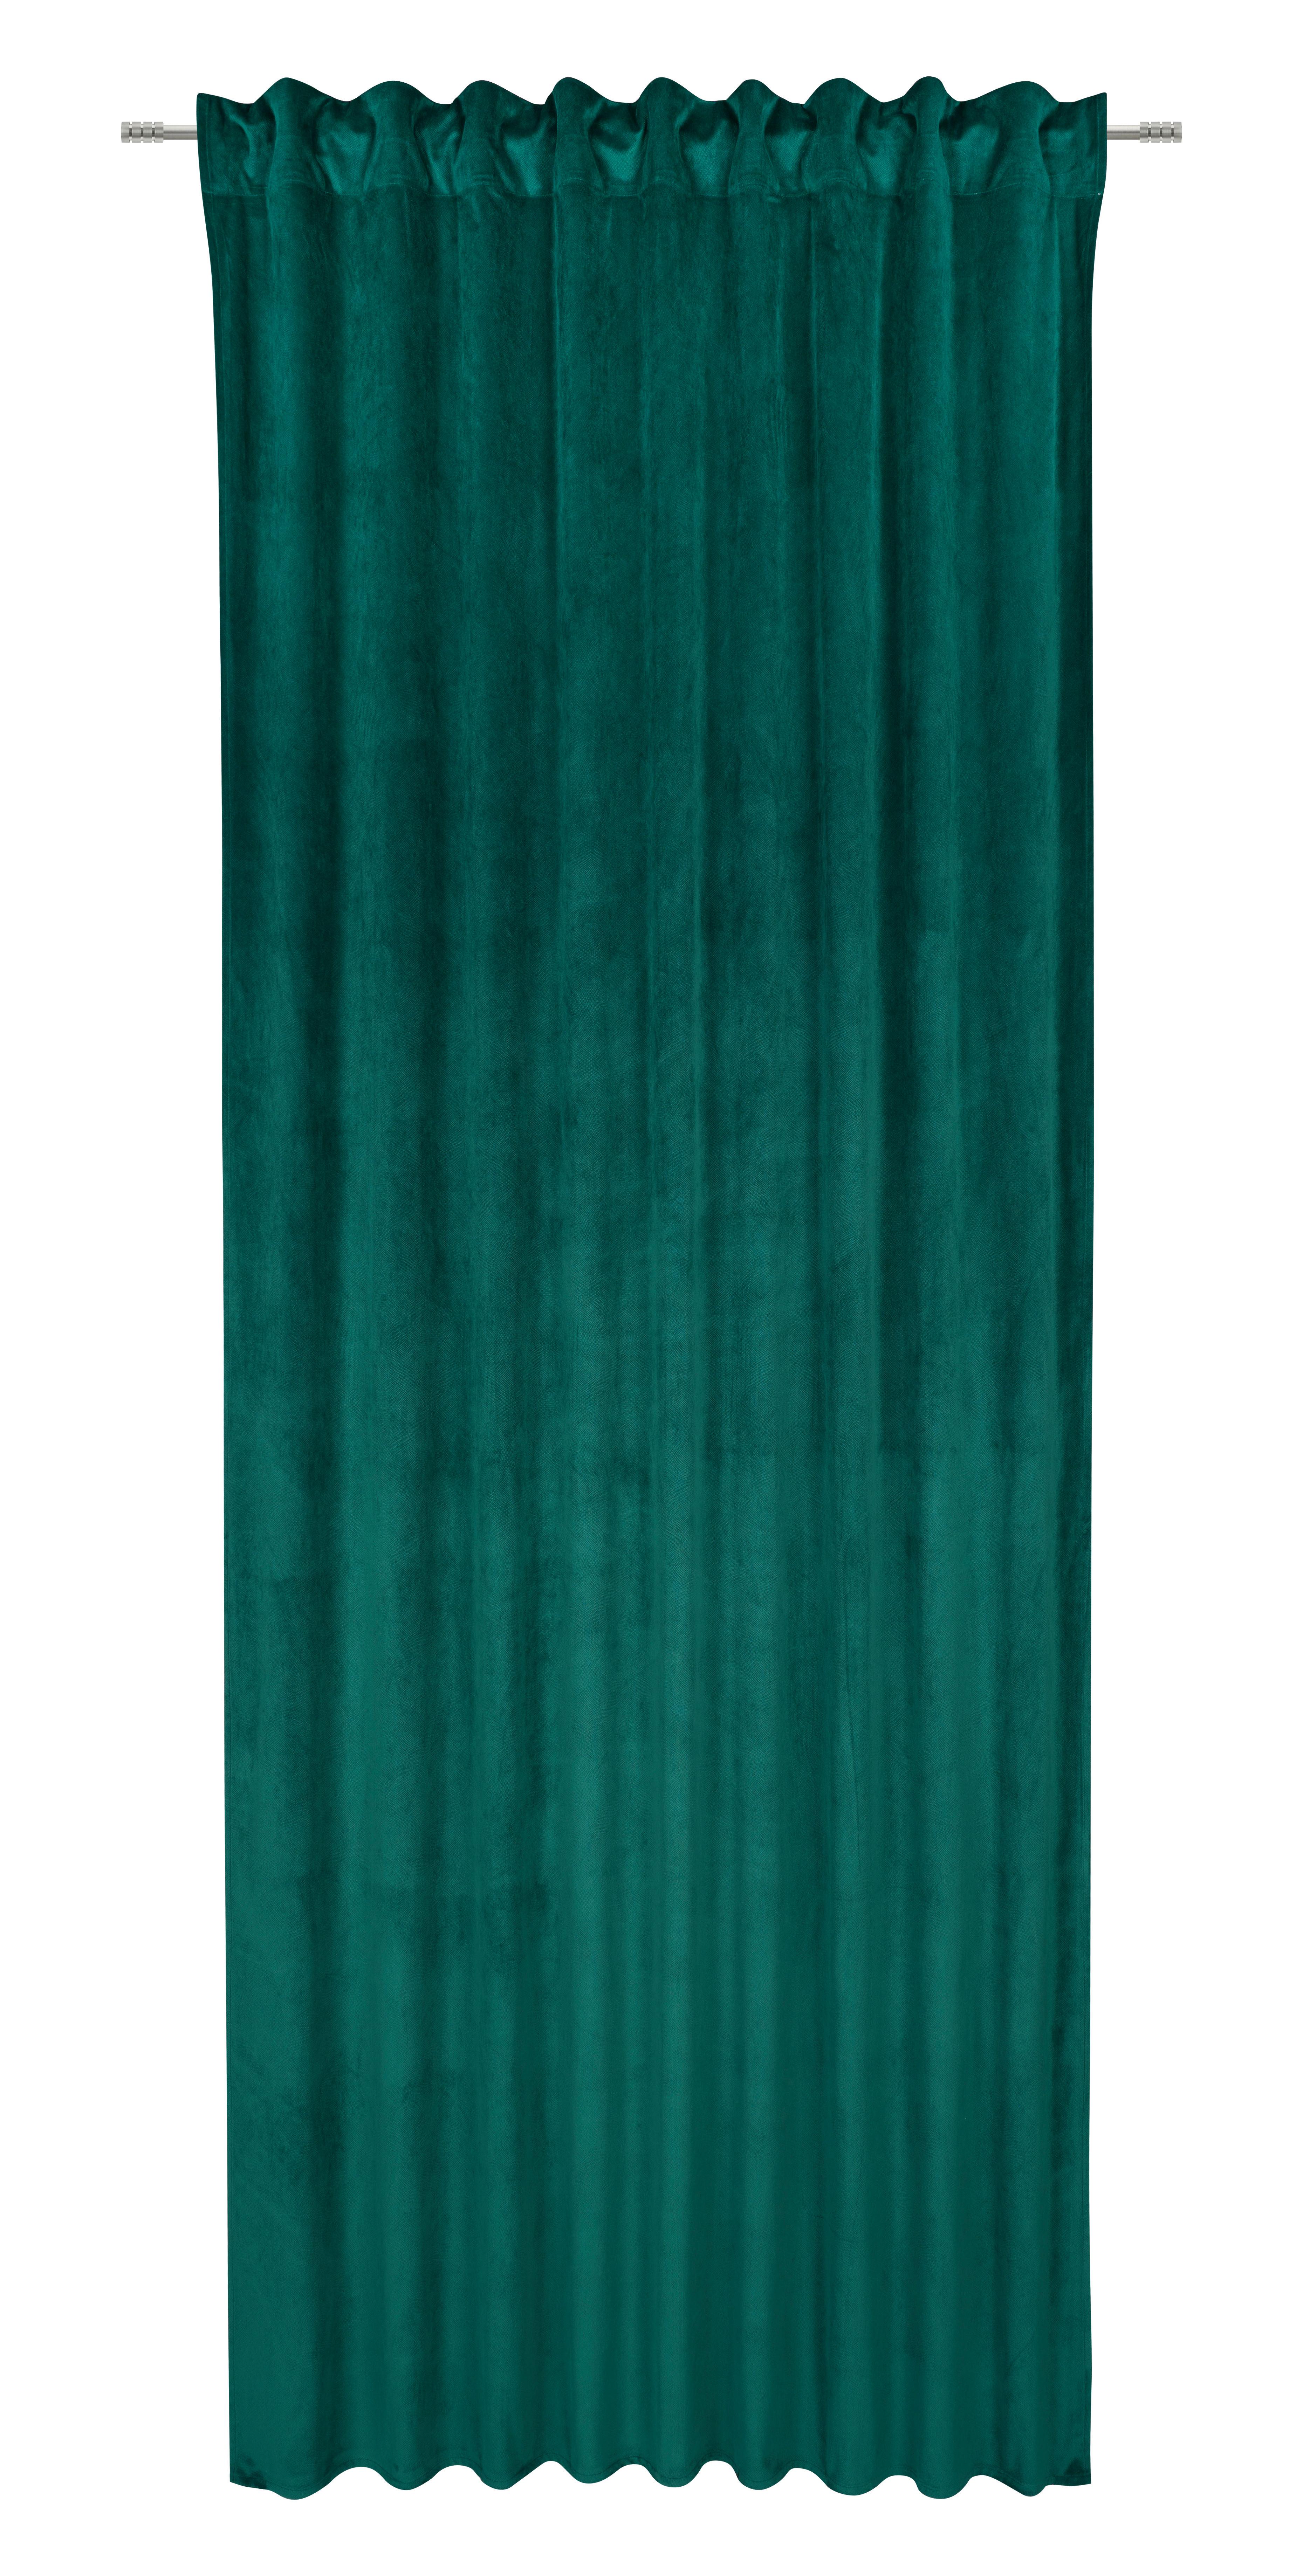 Gotova Zavjesa Bianca - tamno zelena, Konventionell, tekstil (140/245cm) - Modern Living